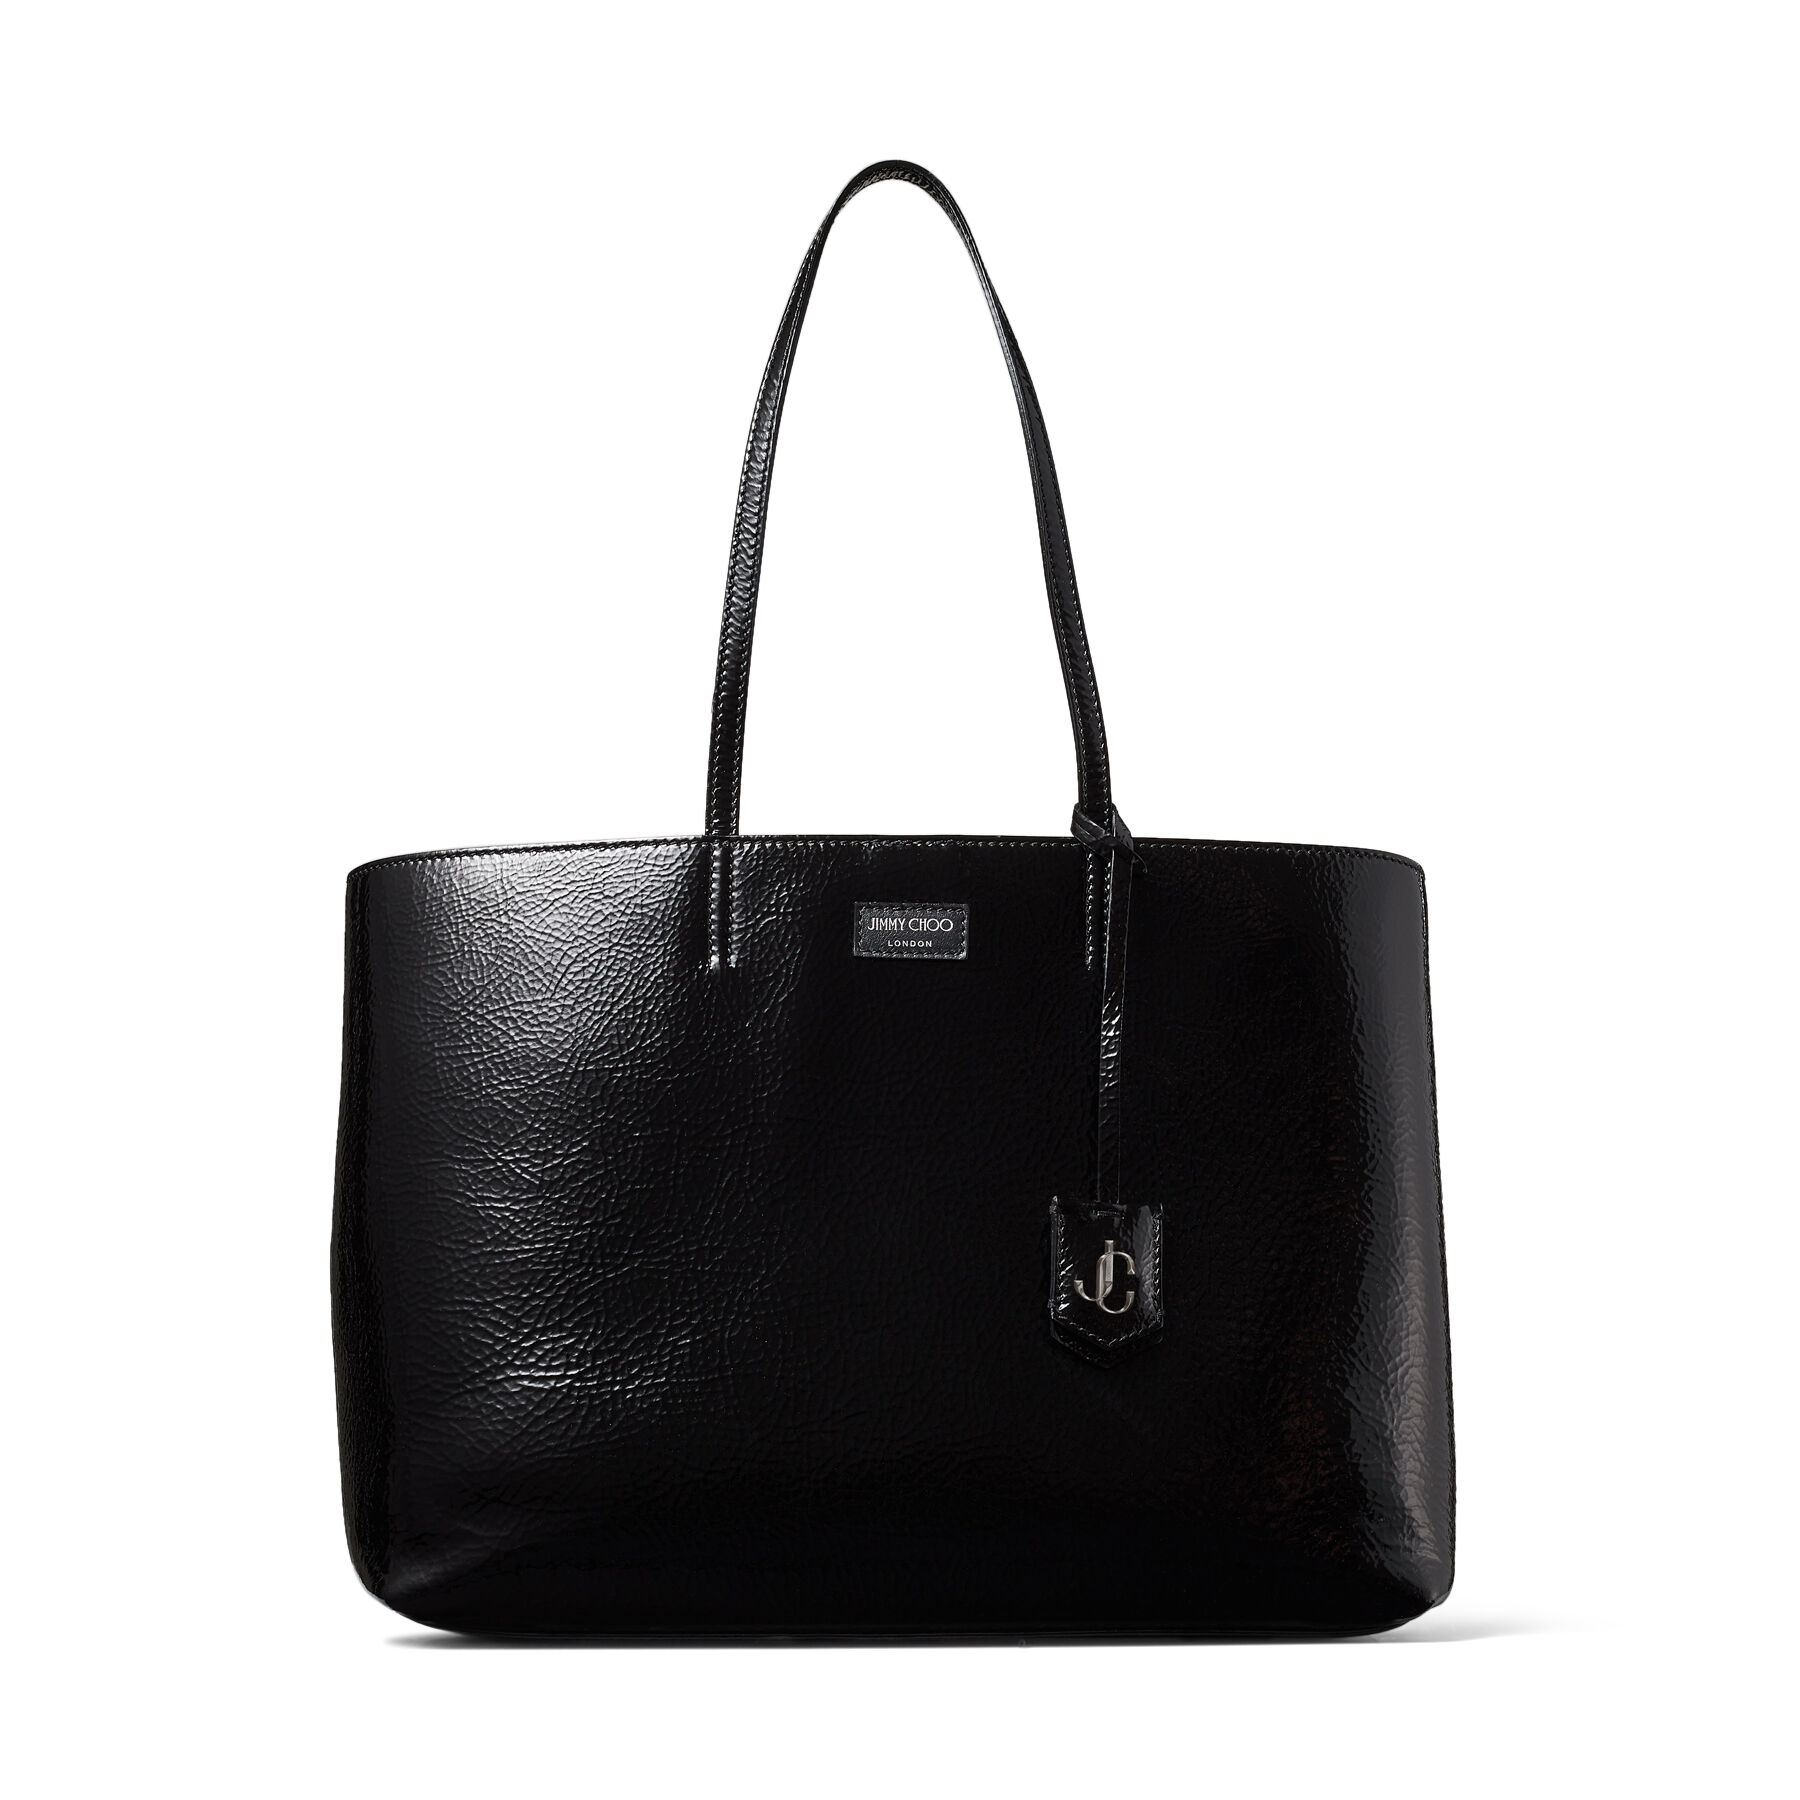 Black Patent Textured Leather Tote Bag | NINE2FIVE E/W | Autumn 